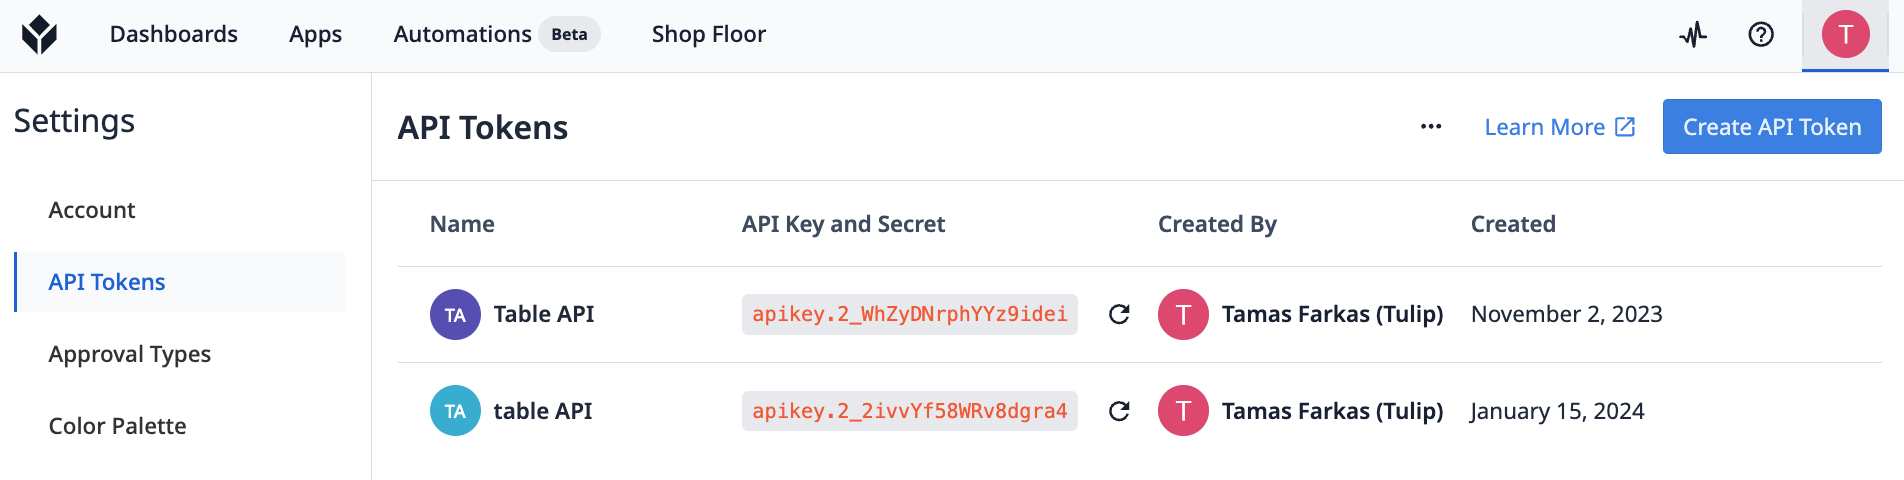 Create API token1.png